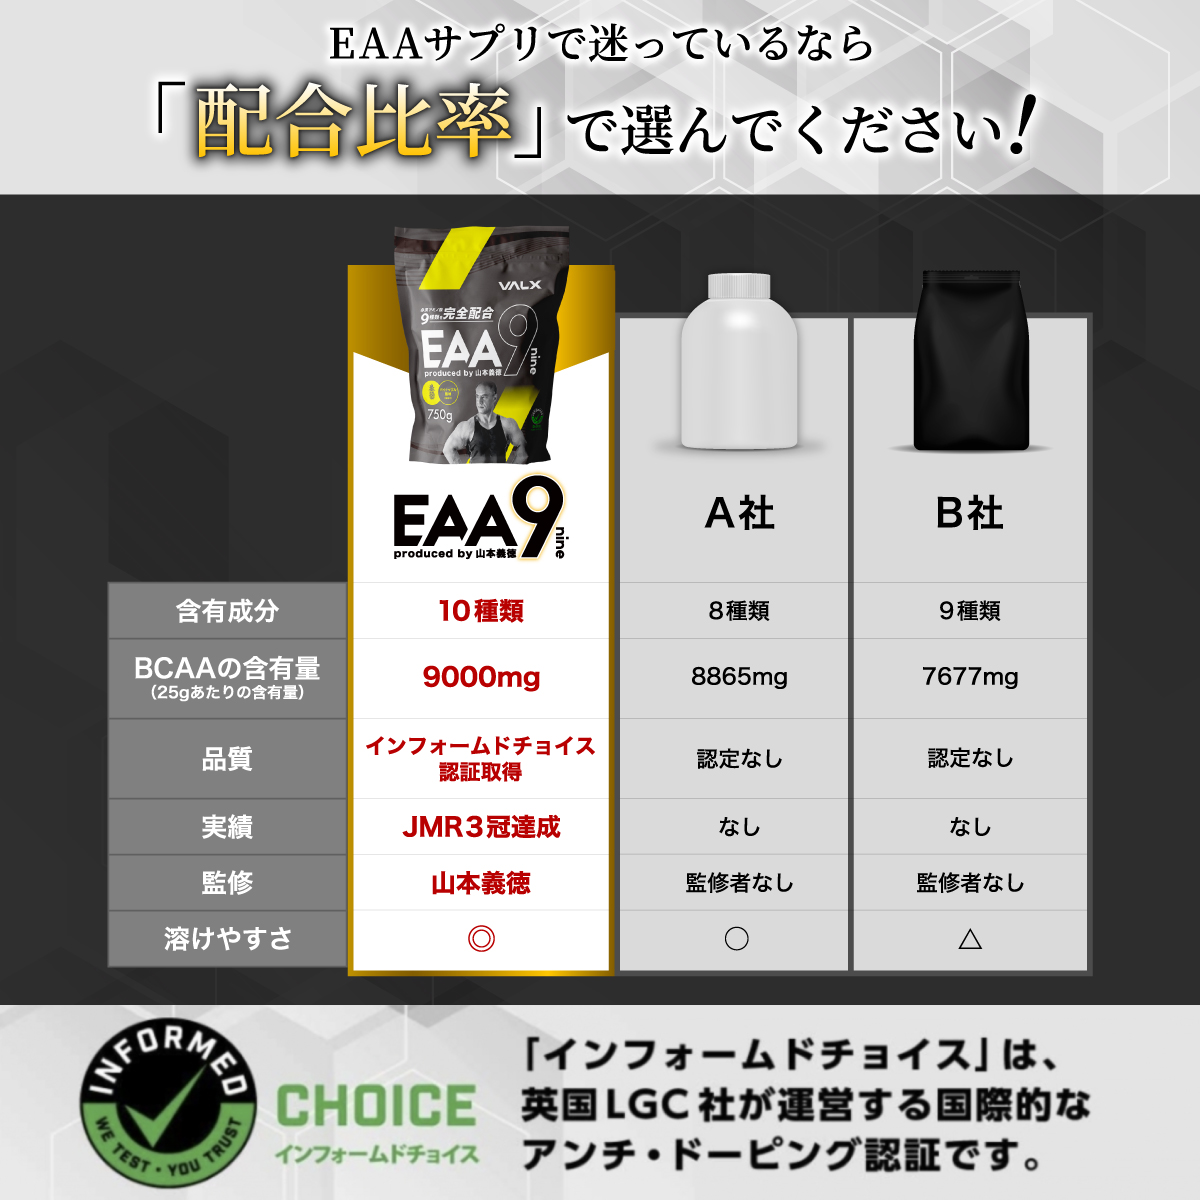 VALX (バルクス) EAA9 Produced by 山本義徳 750g コーラ風味 EAA 必須アミノ酸 イーエーエー ナイン ベータアラニン 配合 男性 女性 ダイエット 筋トレ サプリ オススメ 送料無料